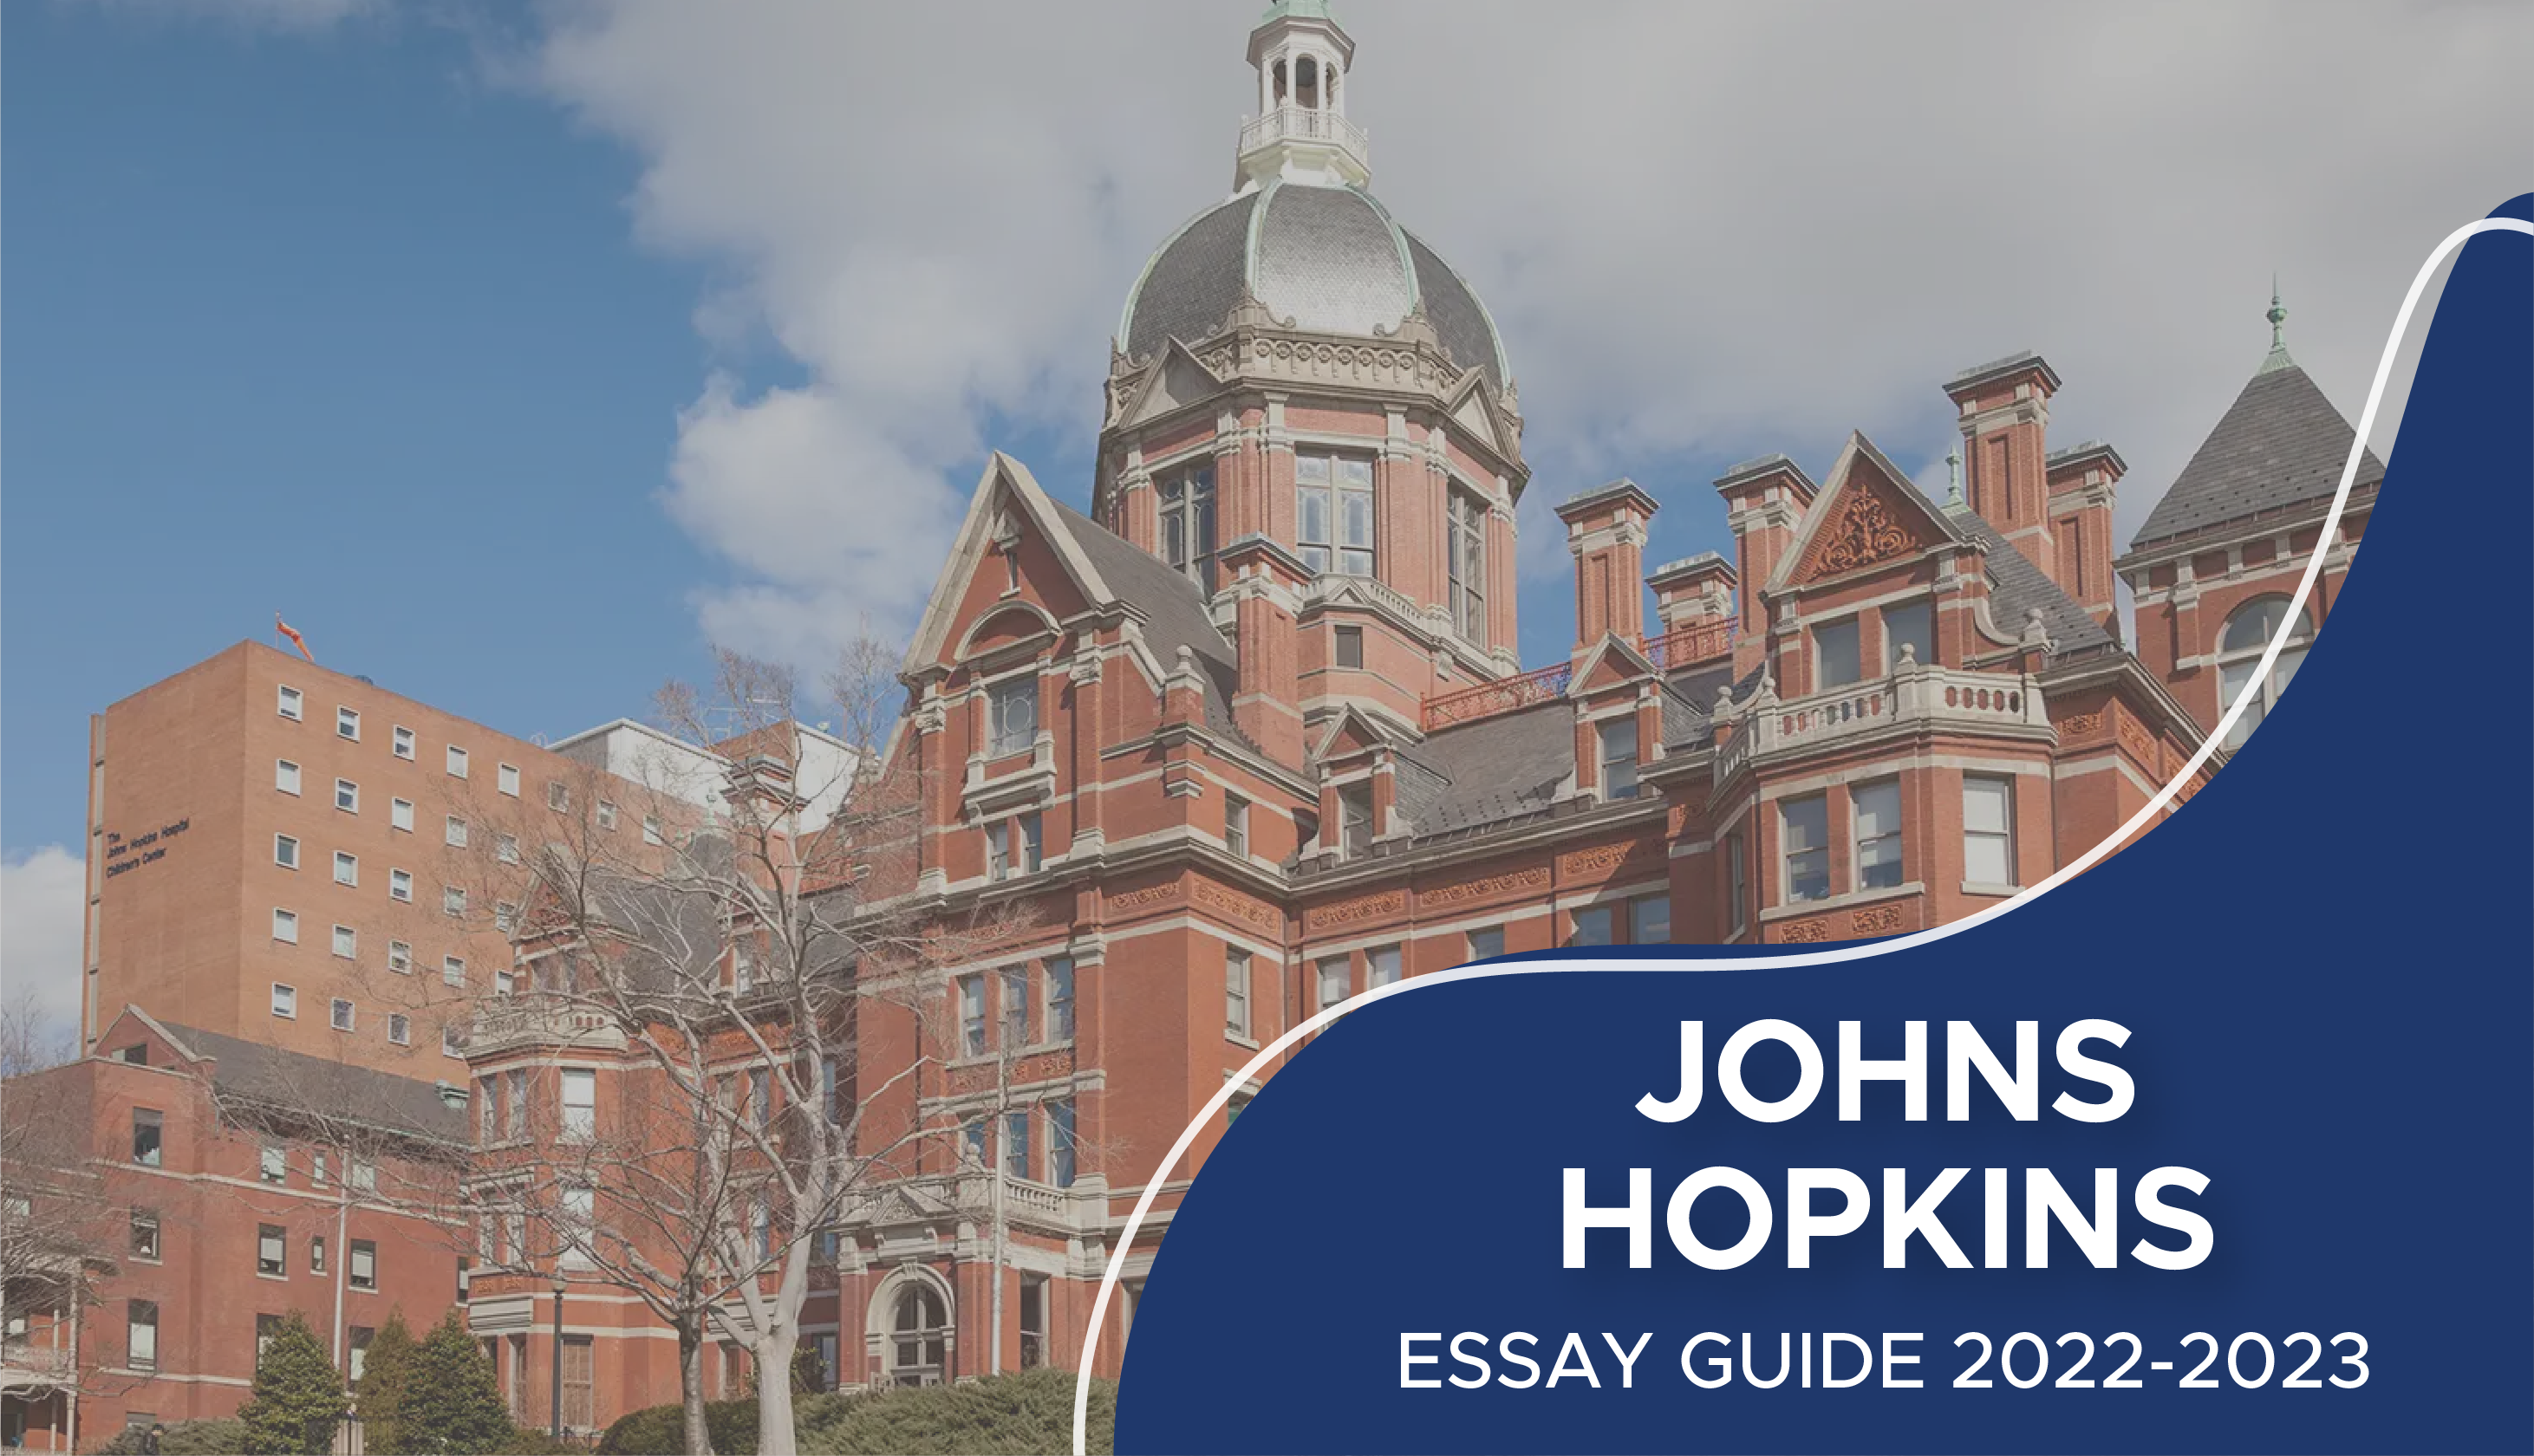 john hopkins essays that worked 2021